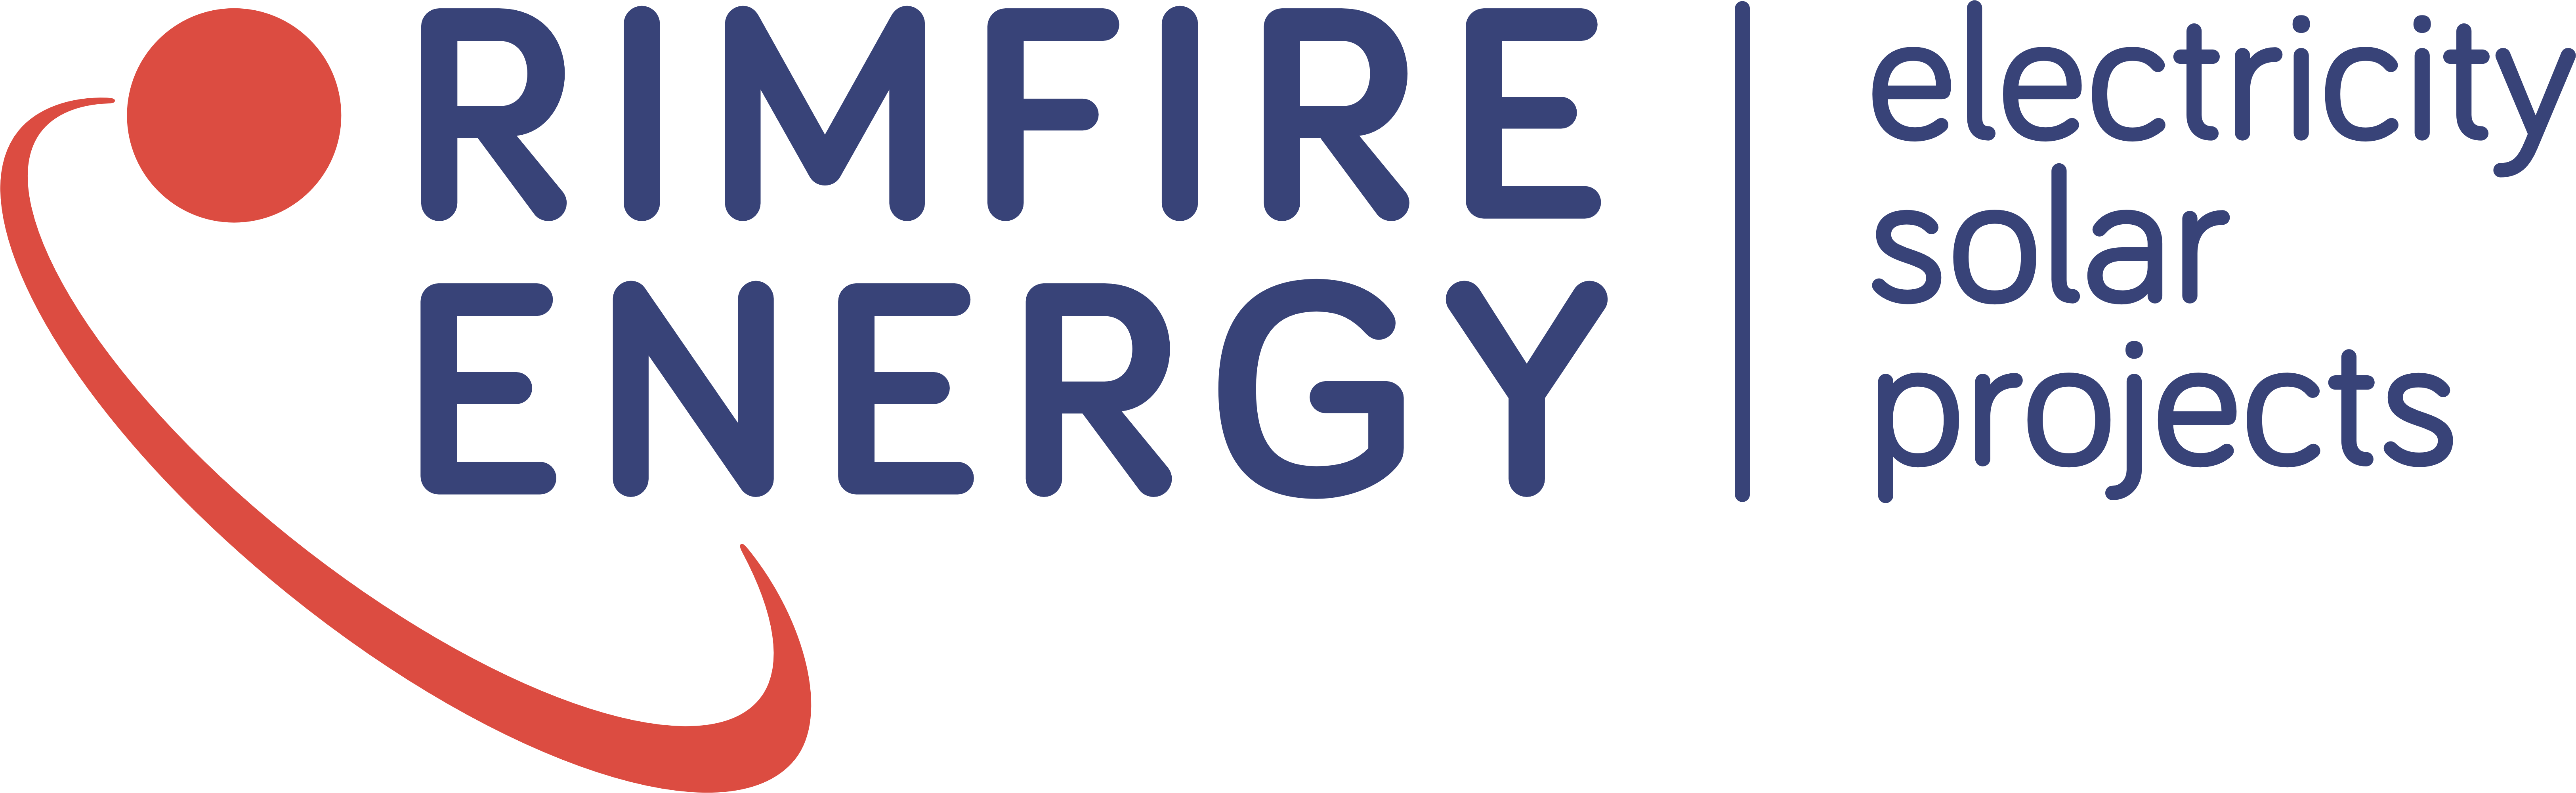 Rimfire Energy Logo